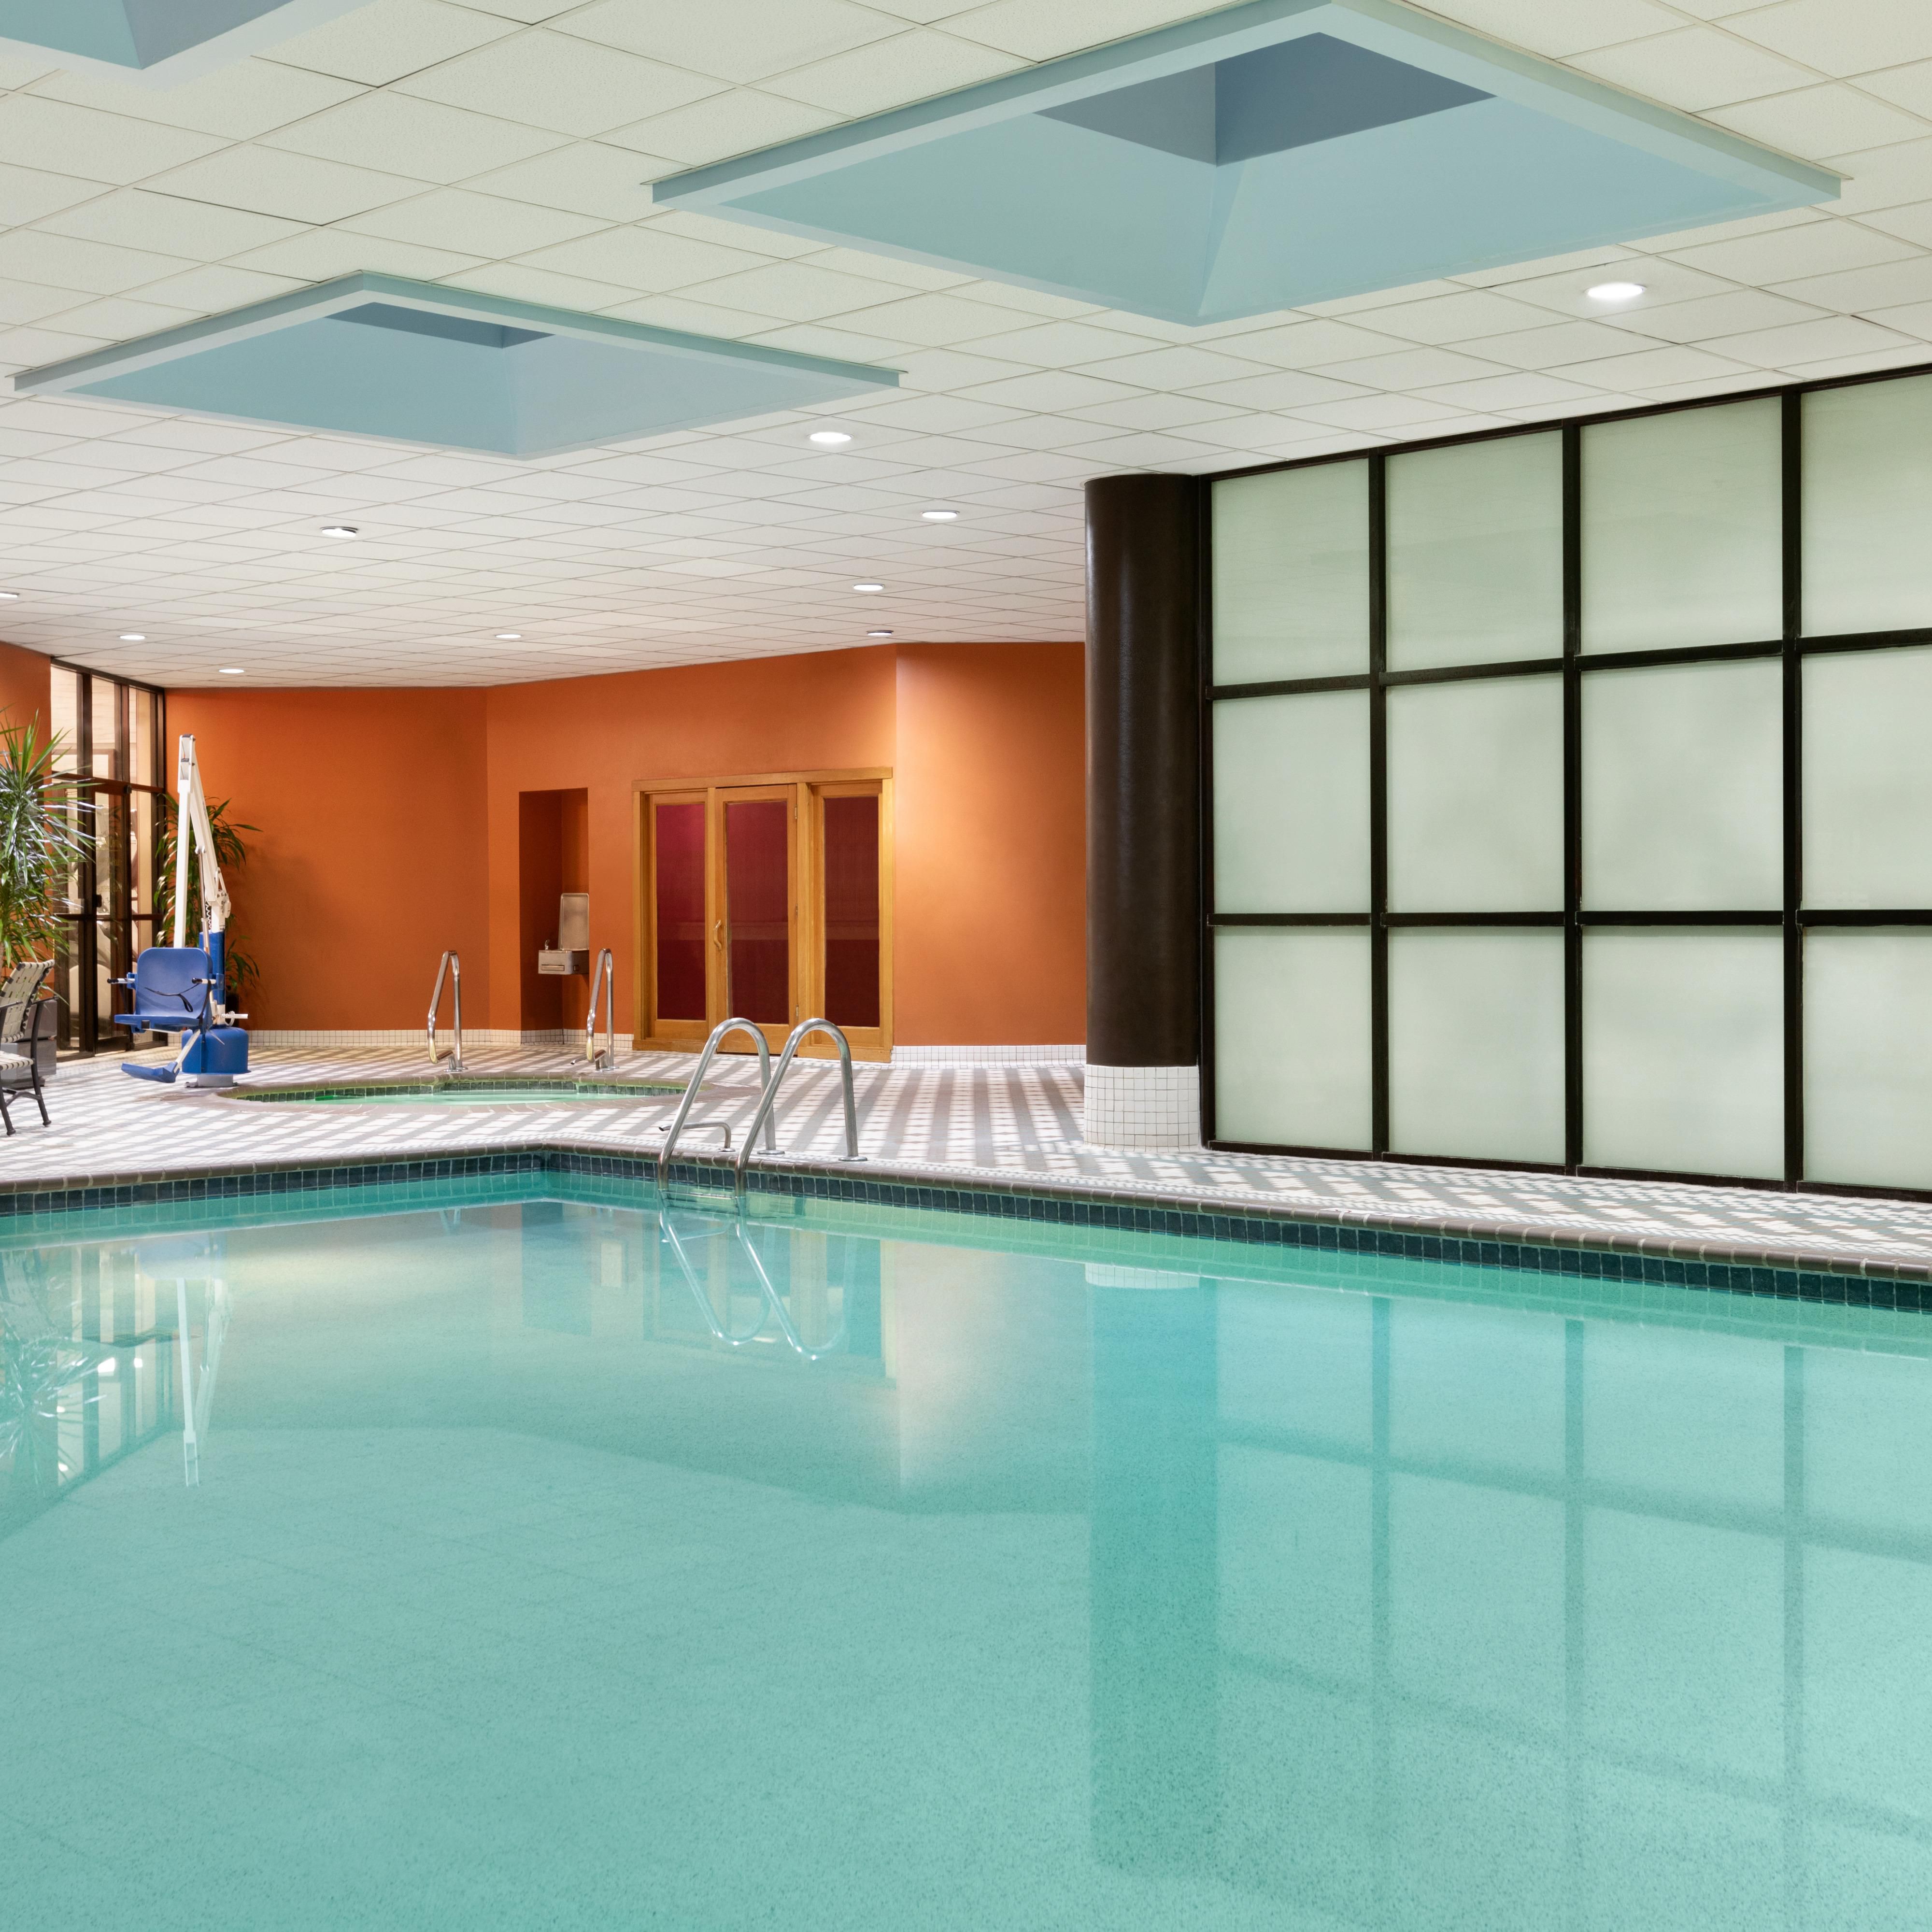 Enjoy our indoor heated pool